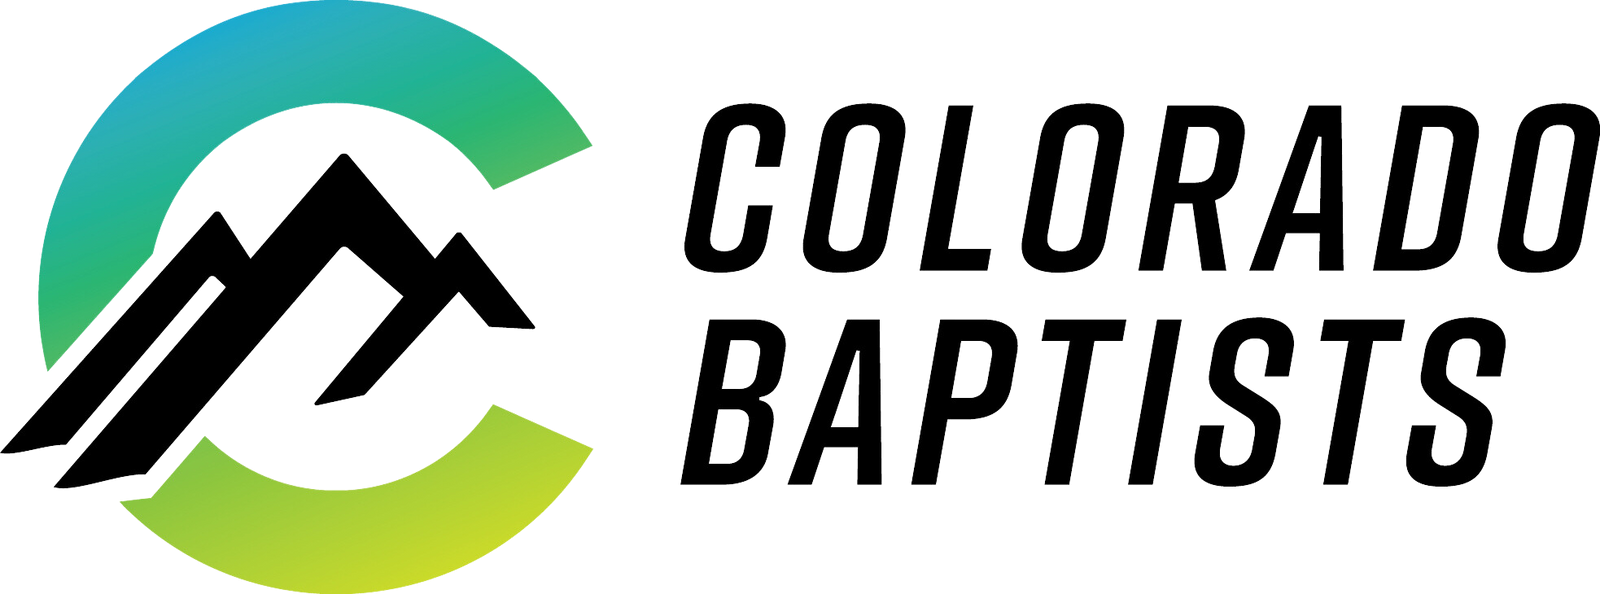 CO Baptists - Edited